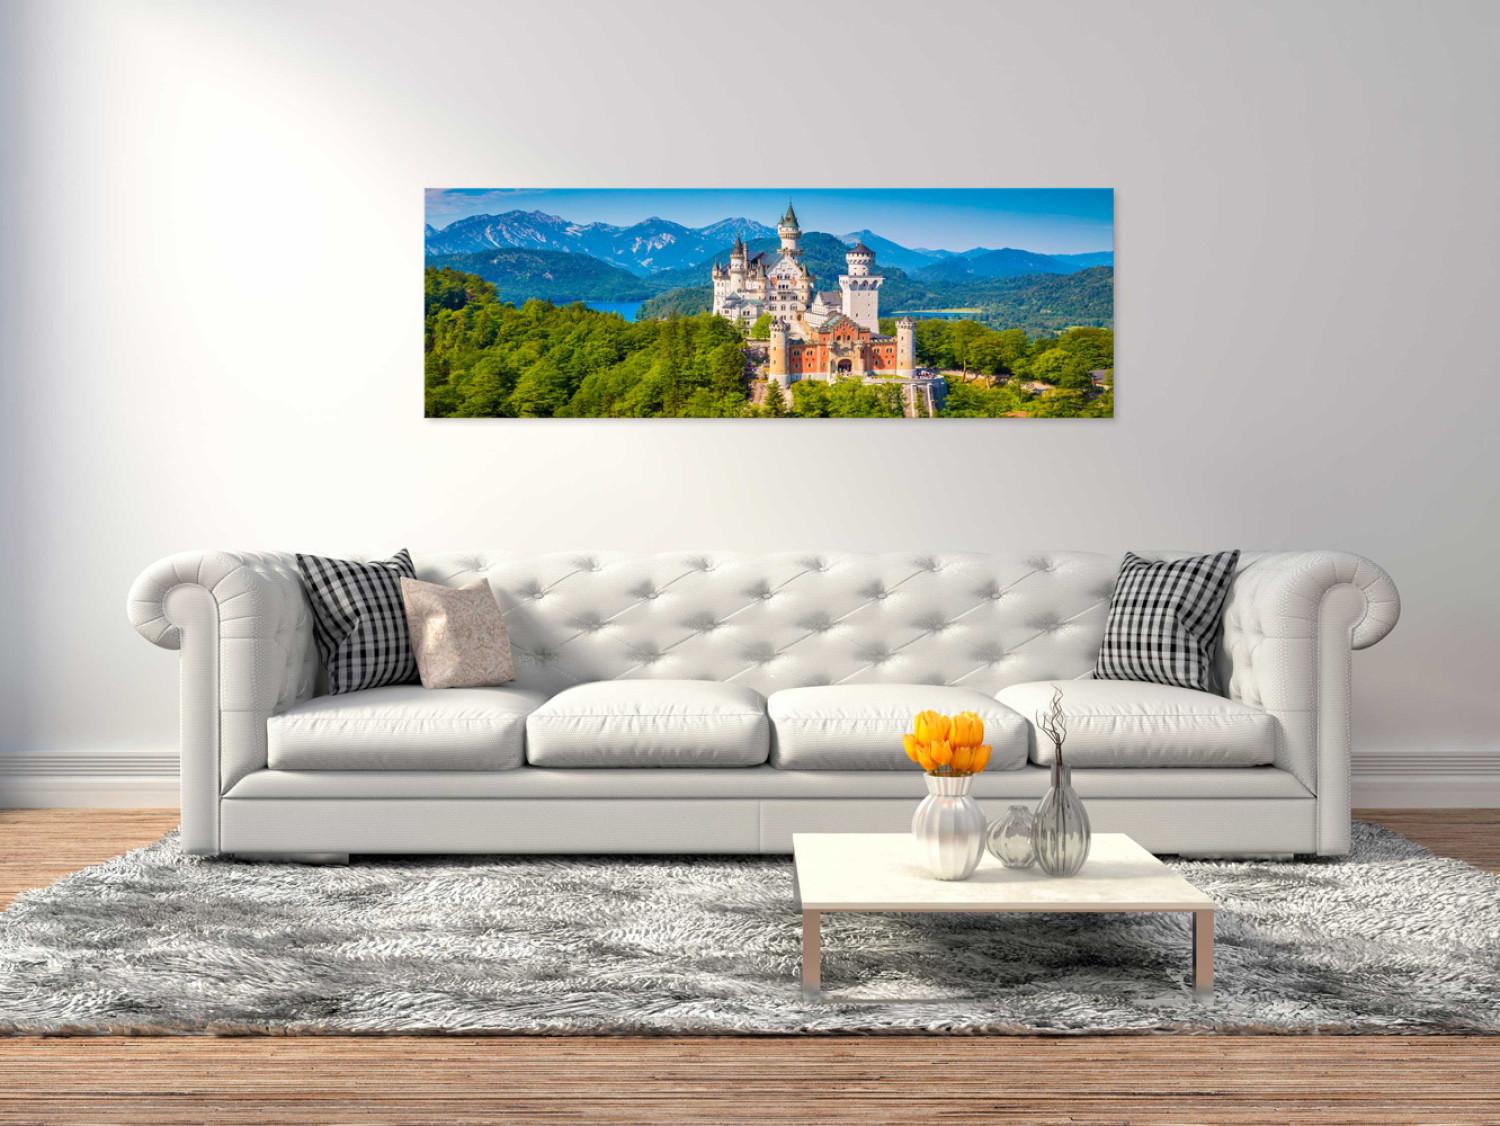 Cuadro decorativo Magic Places: Neuschwanstein Castle